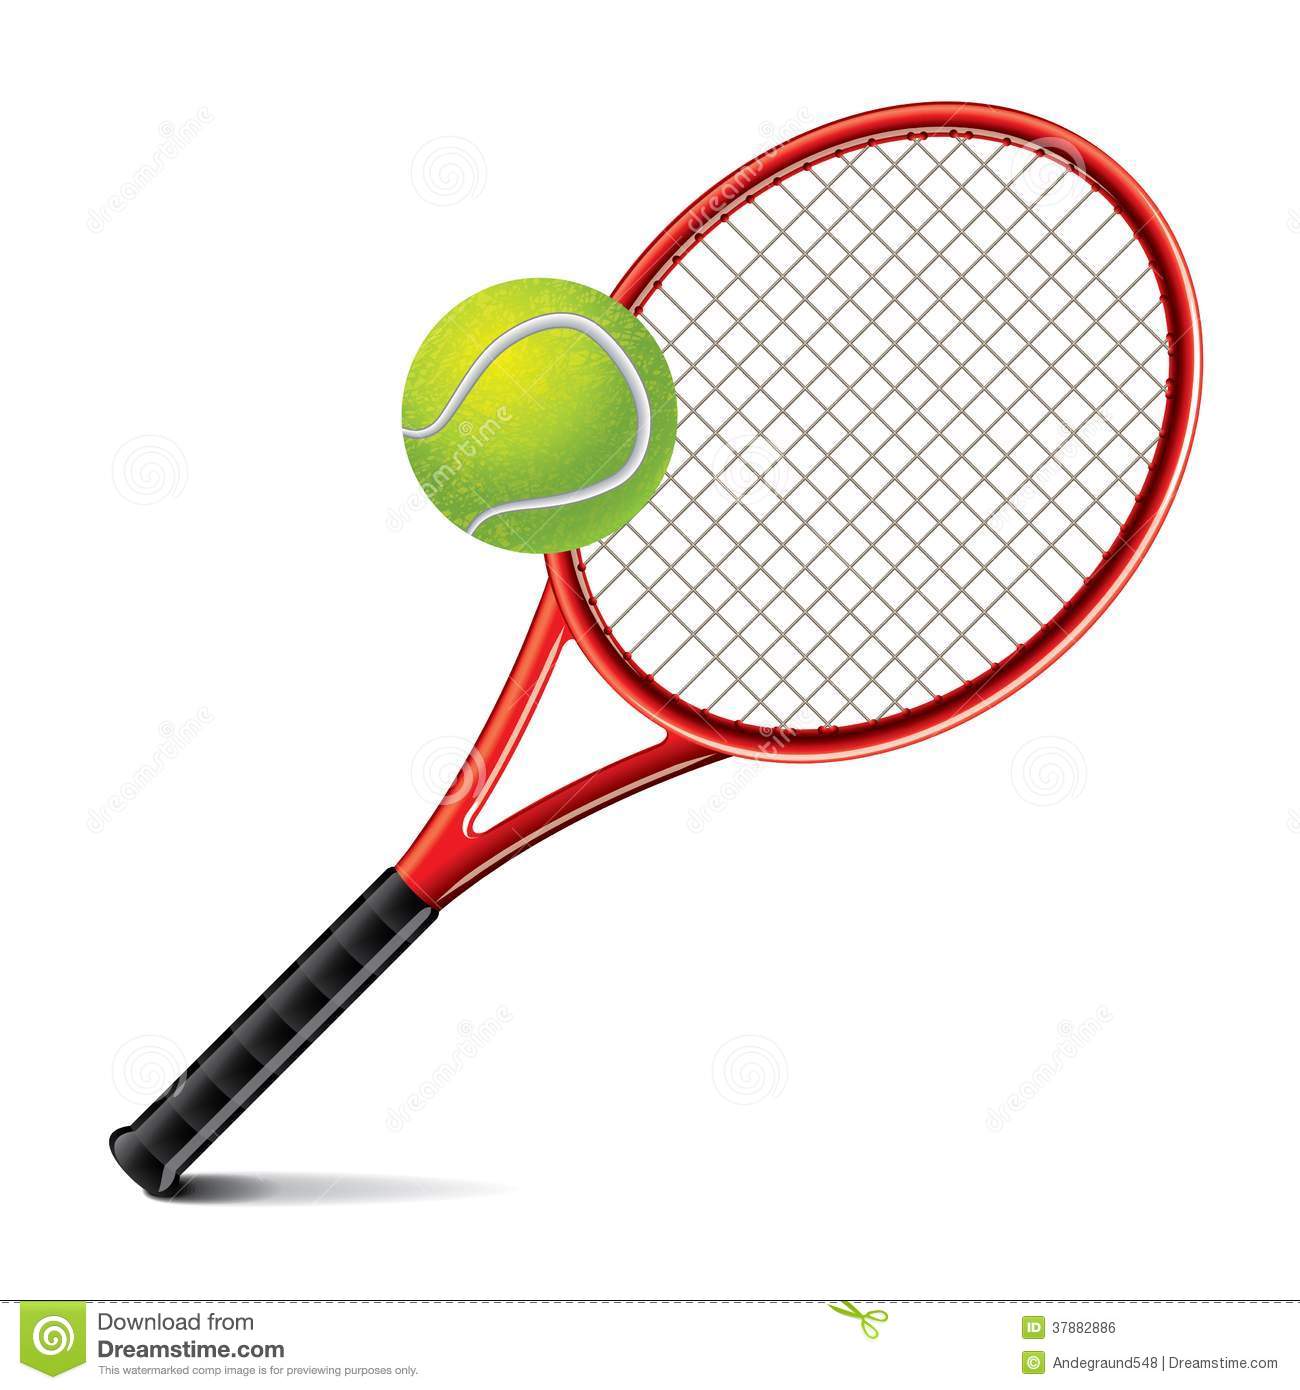 353 Tennis Racket free clipart.